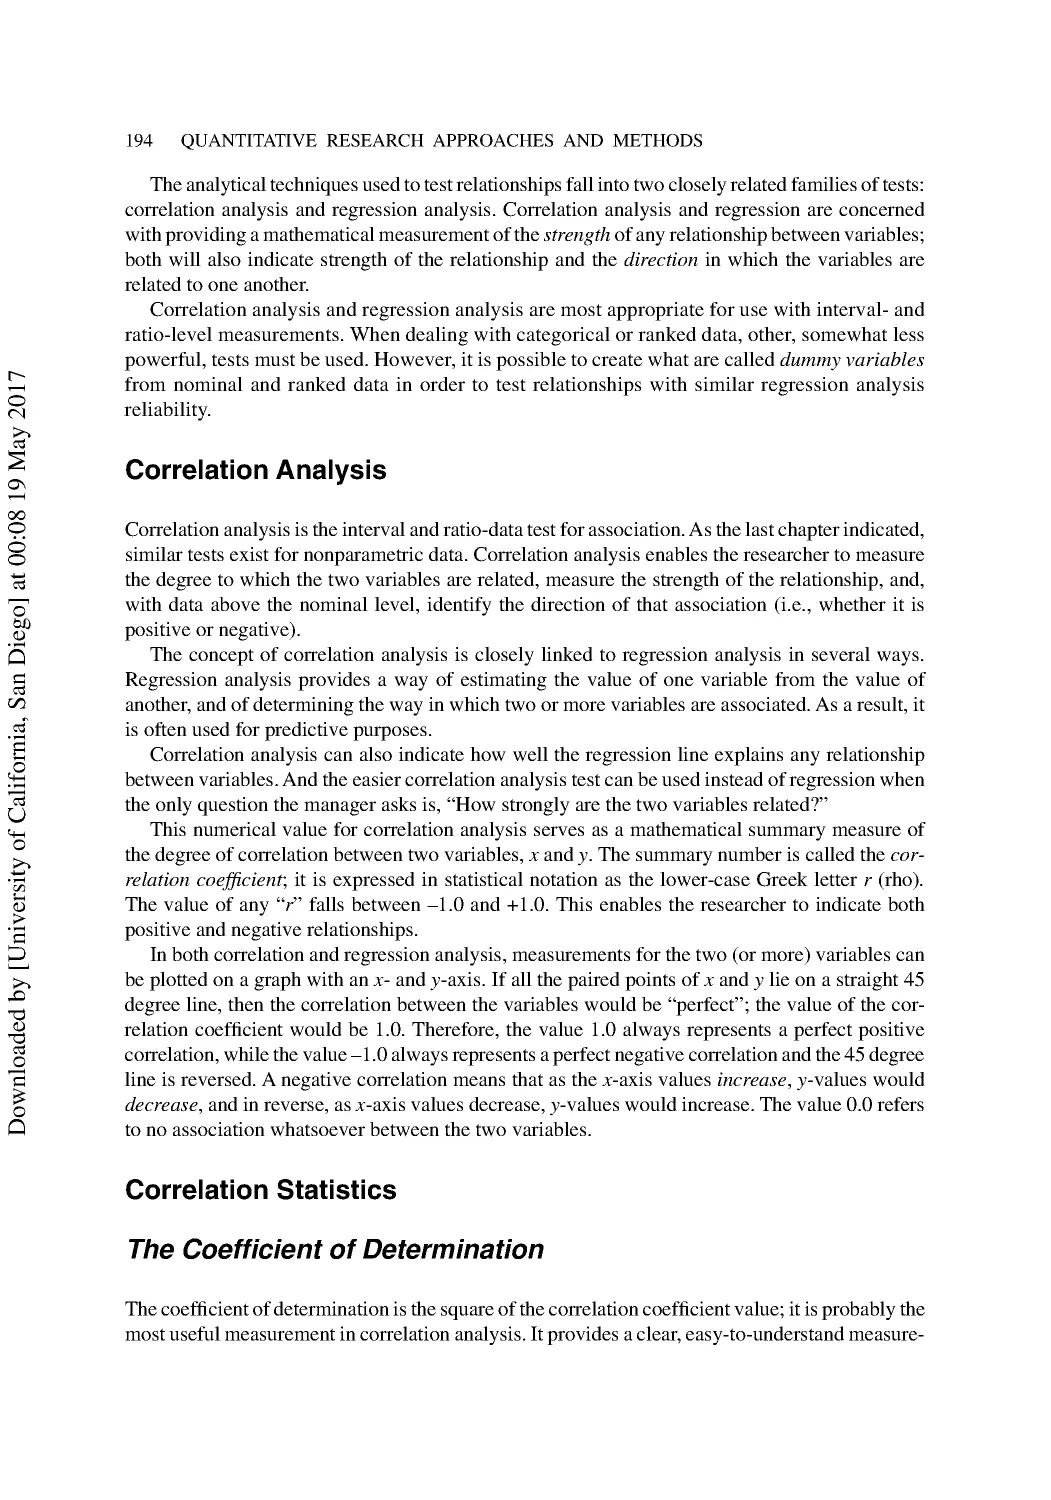 Correlation Analysis
Correlation Statistics